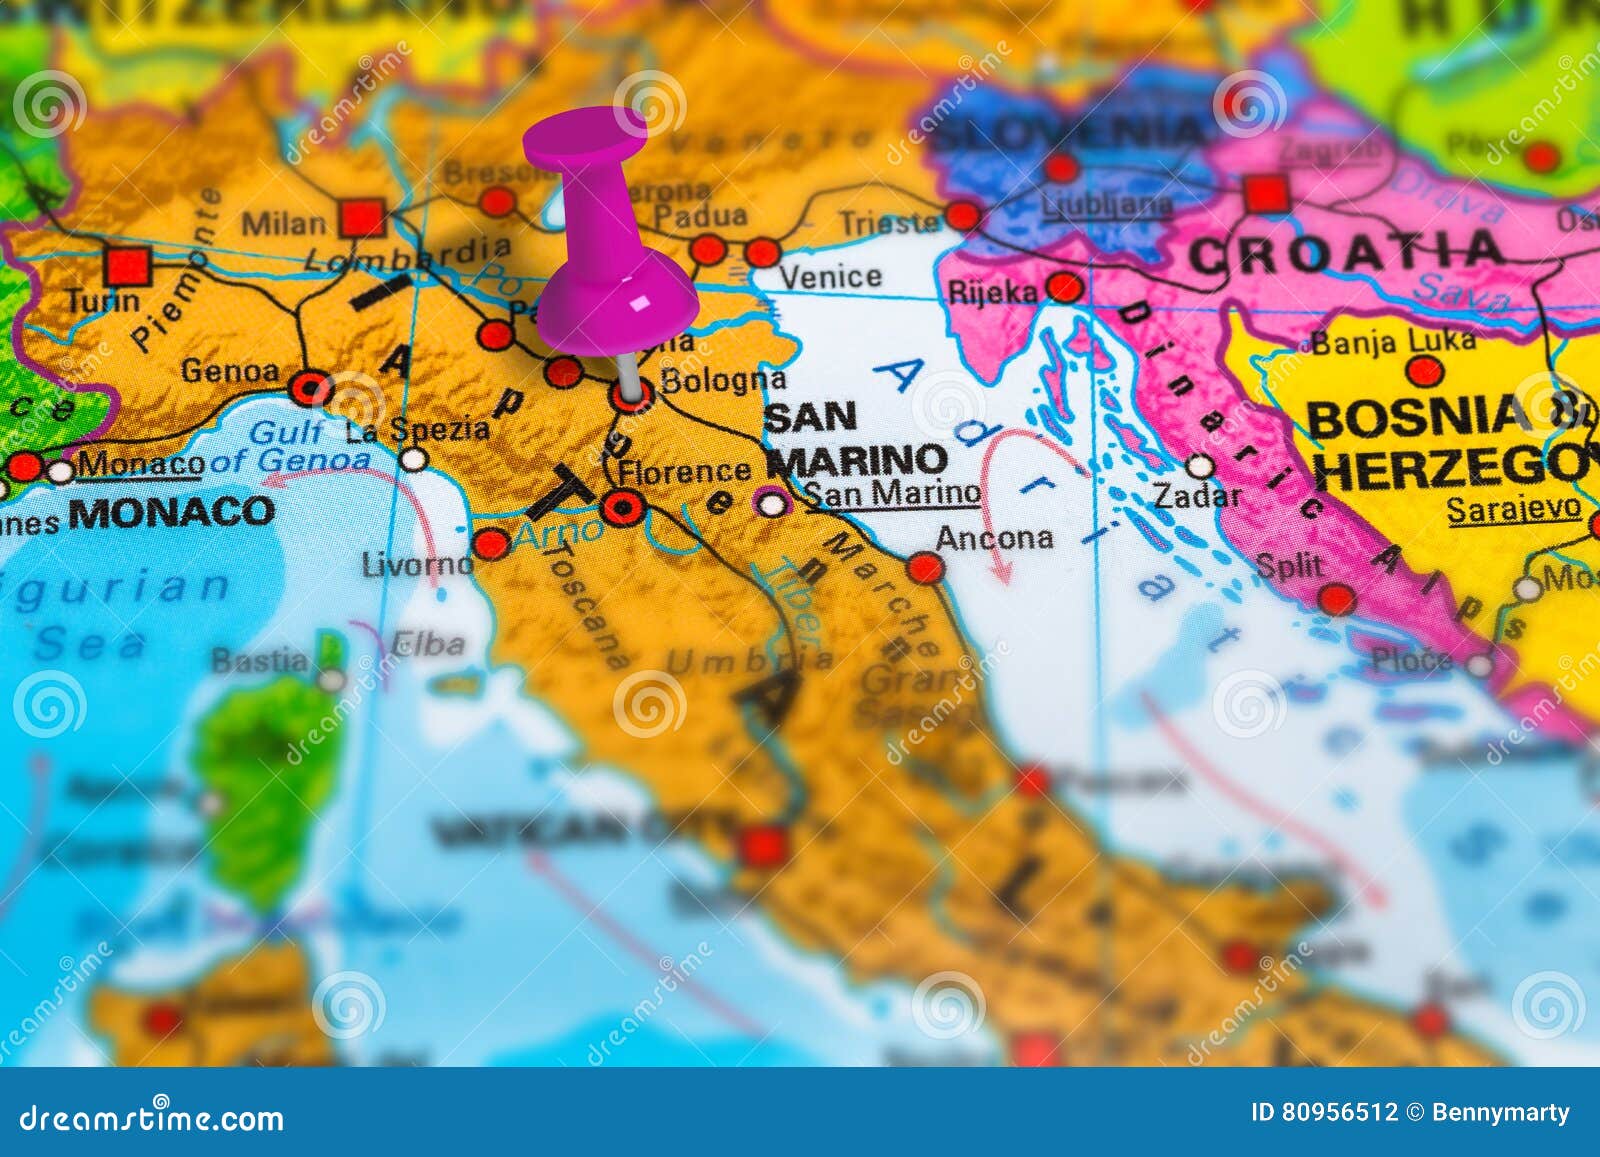 дефиниция посредник непълен Bologna Map Photos - Free & Royalty-Free Stock Photos from Dreamstime